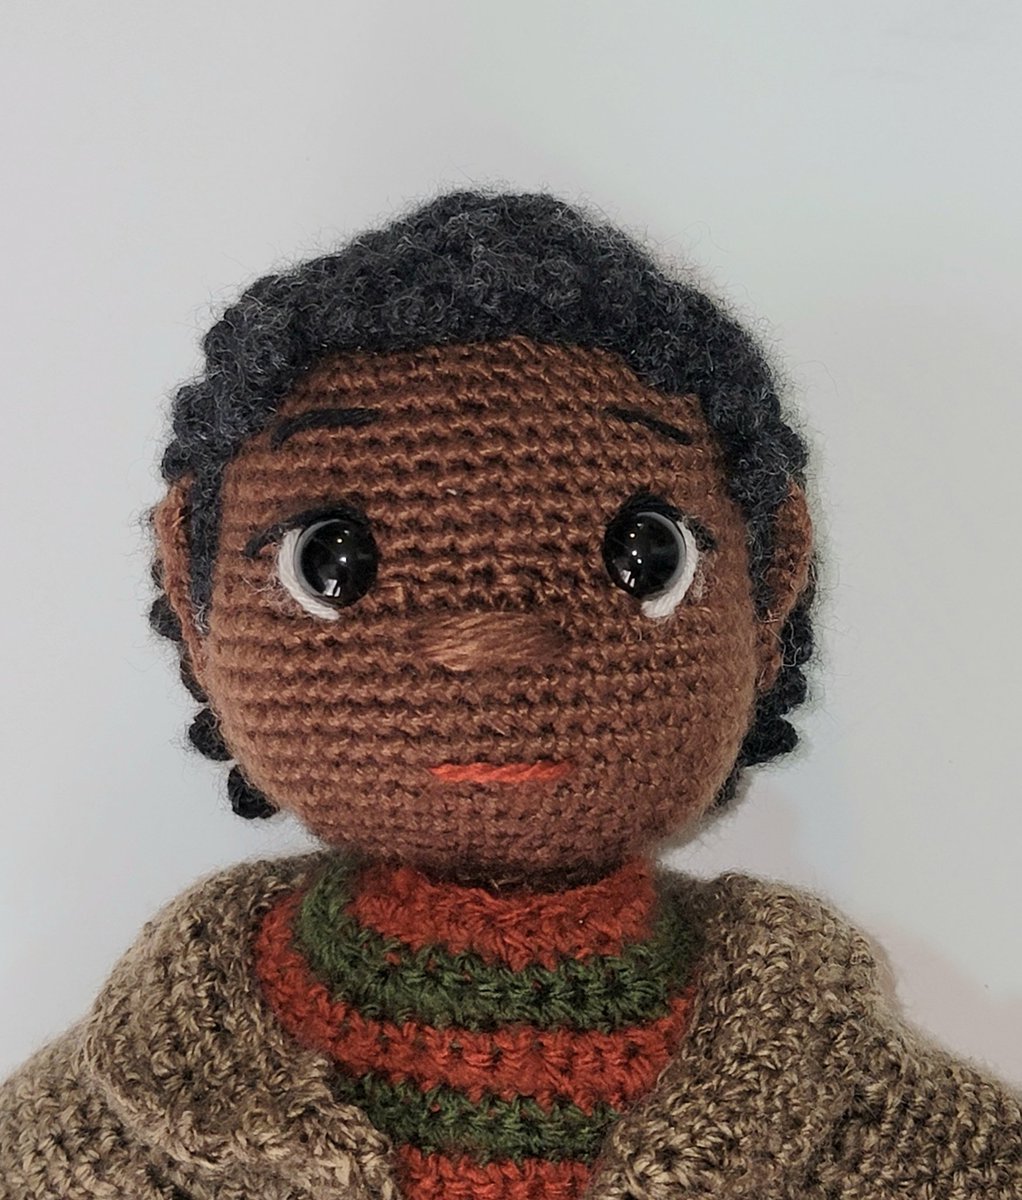 Enjoying Crochet LLC presents... Willis A new doll member available for adoption here... enjoyingcrochetllc.ecrater.com/p/42985455/han… LIKE, SHARE, VISIT, ADOPT #crochet #crocheting #crochetdolls Follow me here... Facebook.com/EnjoyingCrochet Instagram.com/enjoyingcrochet x.com/enjoyingcroche1